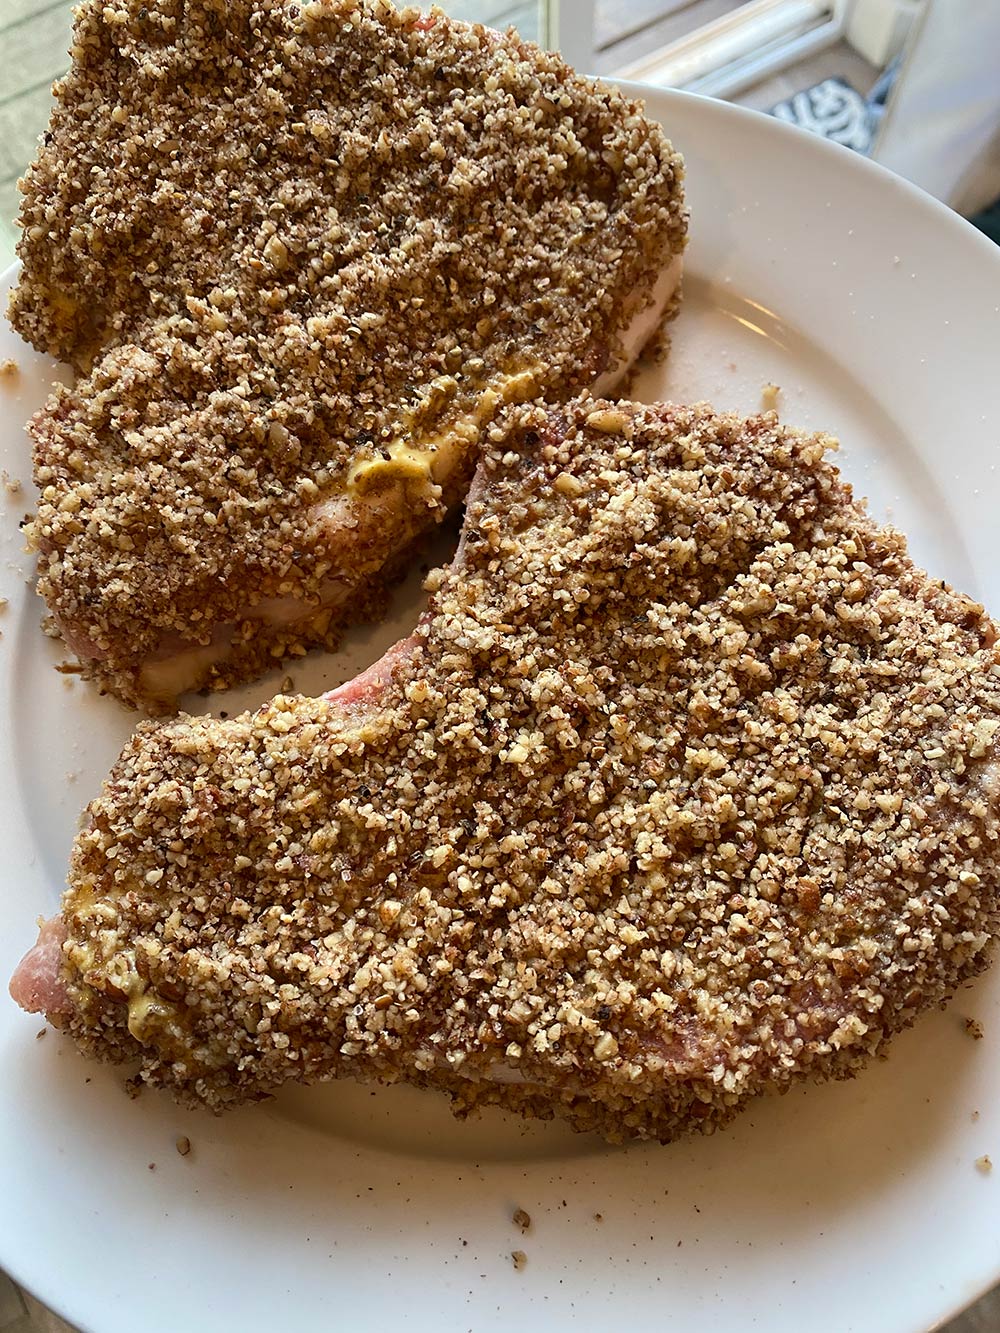 Pecan Crusted Pork Chop recipe from Oregon Valley Farm